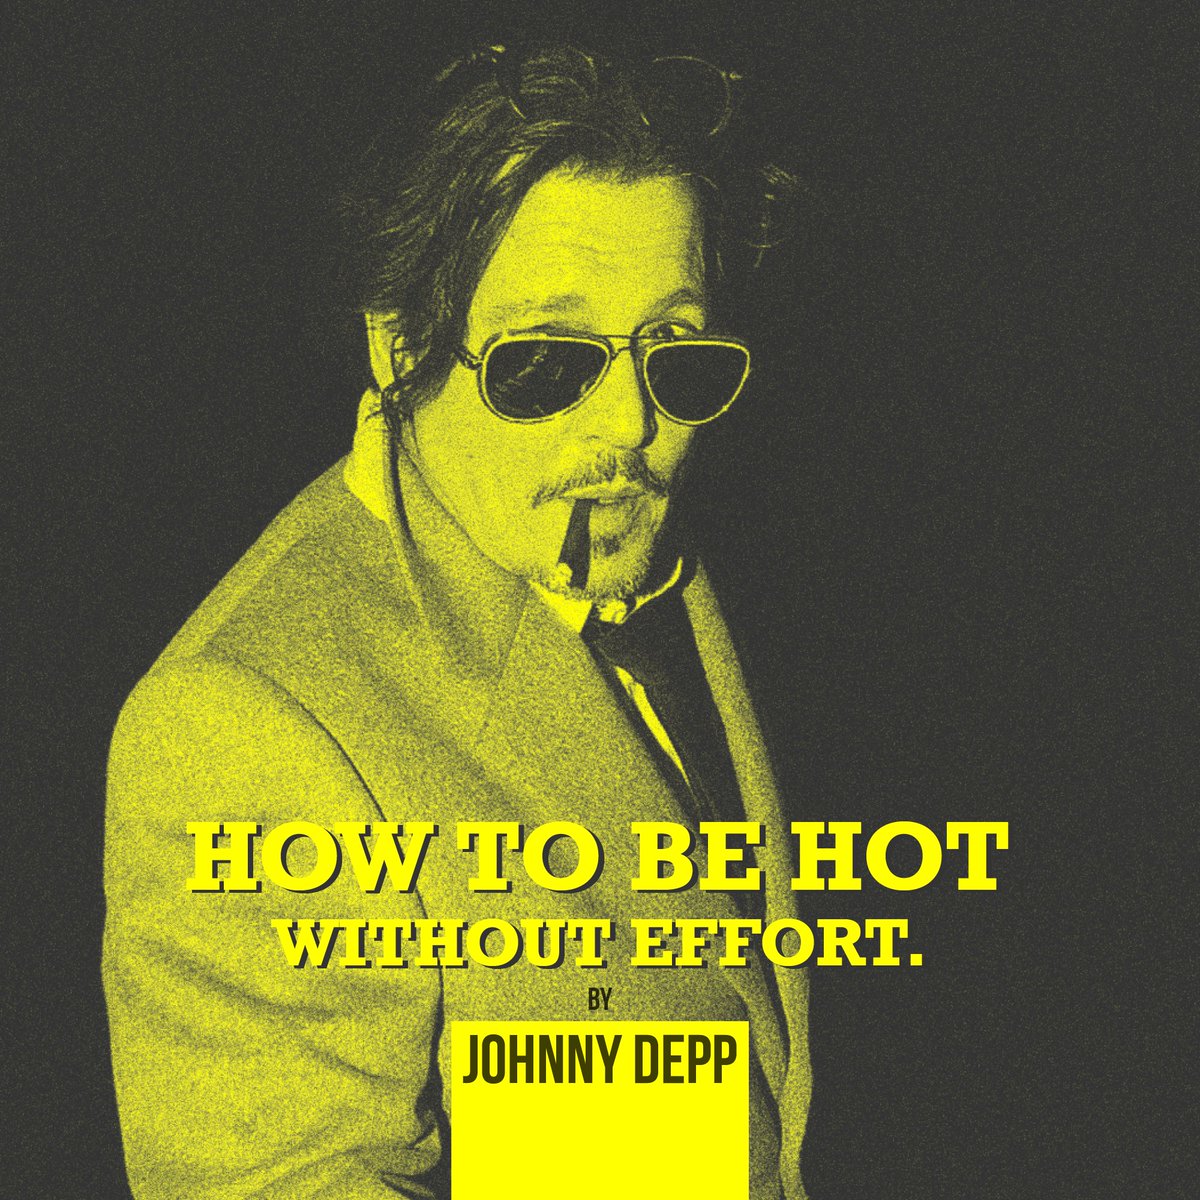 The world needs this reference book! 🙏 #JohnnyDepp #JohnnyDeppIsALegend #JohnnyDeppIsLoved